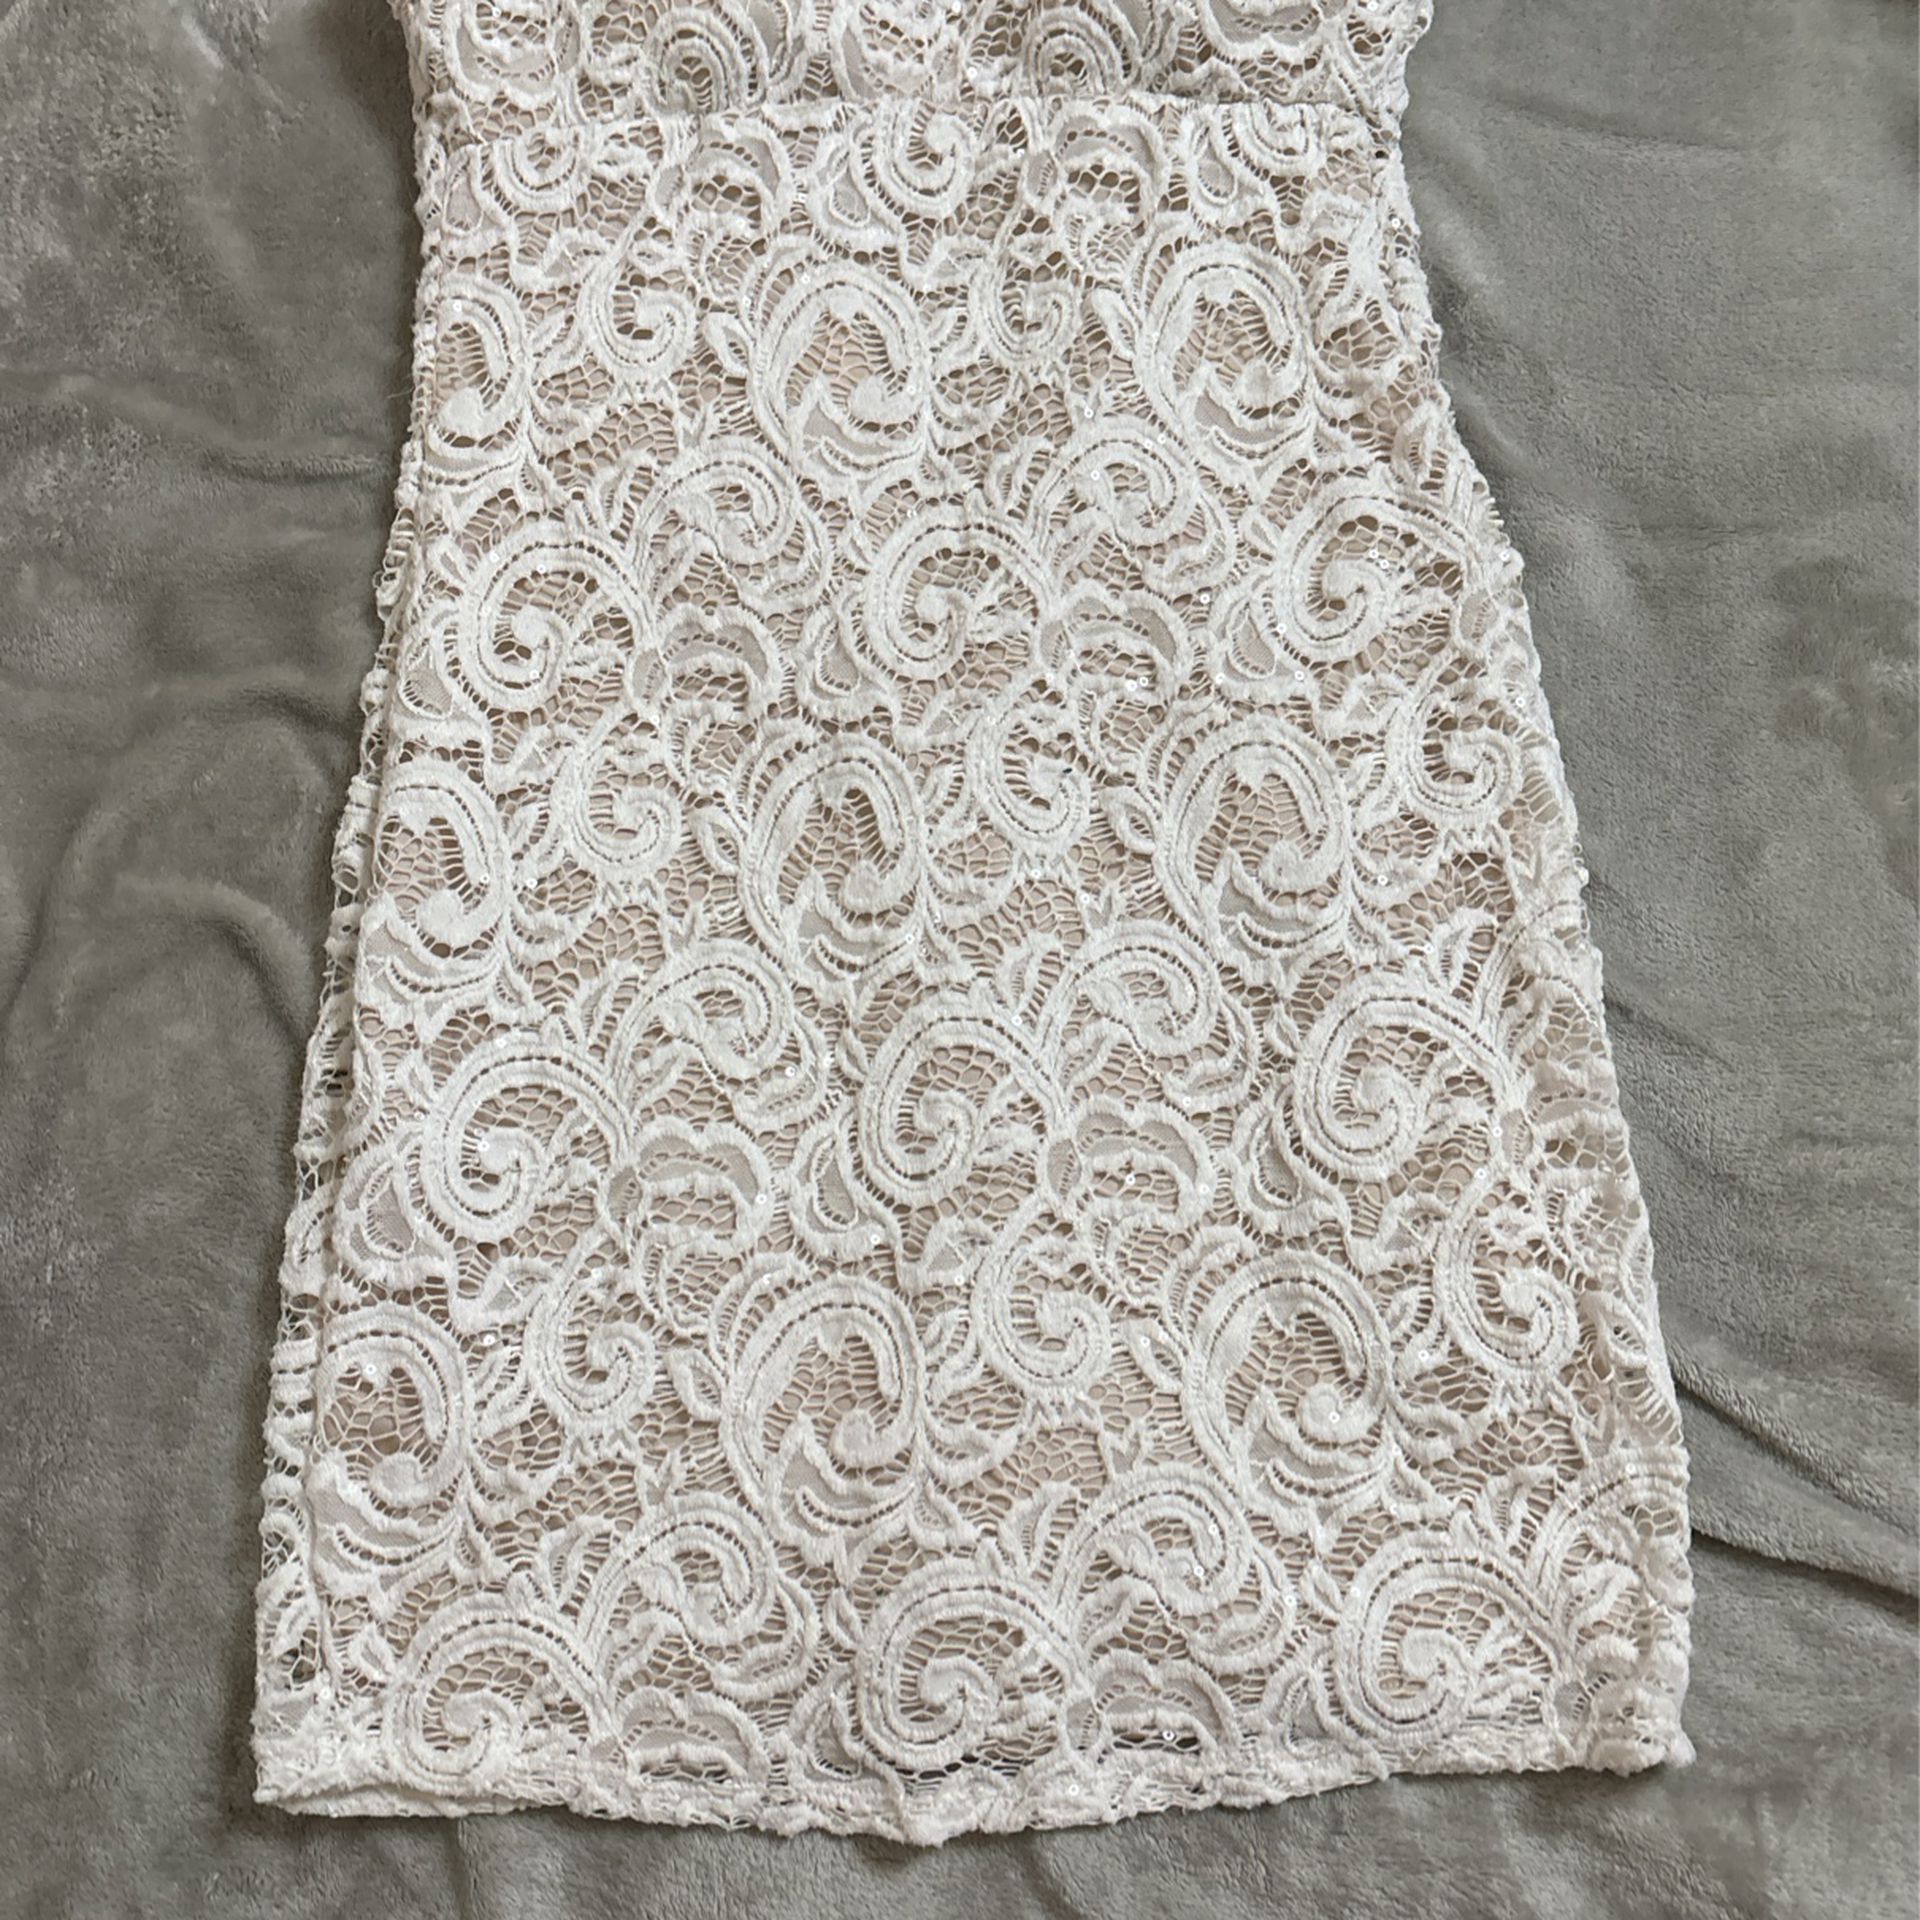 White Lace Dress 